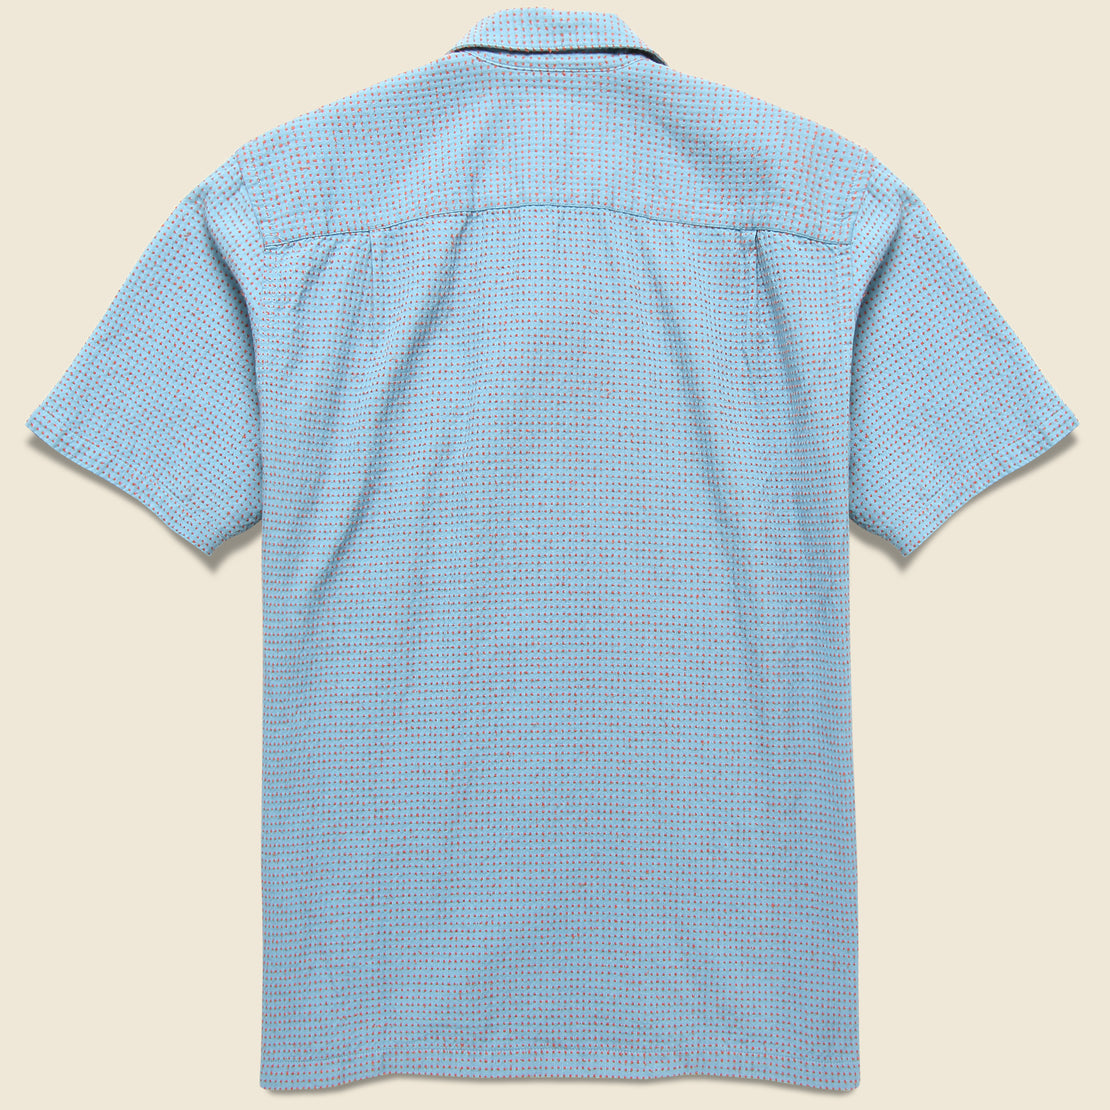 Ring Woven Dot Shirt - Blue/Brick